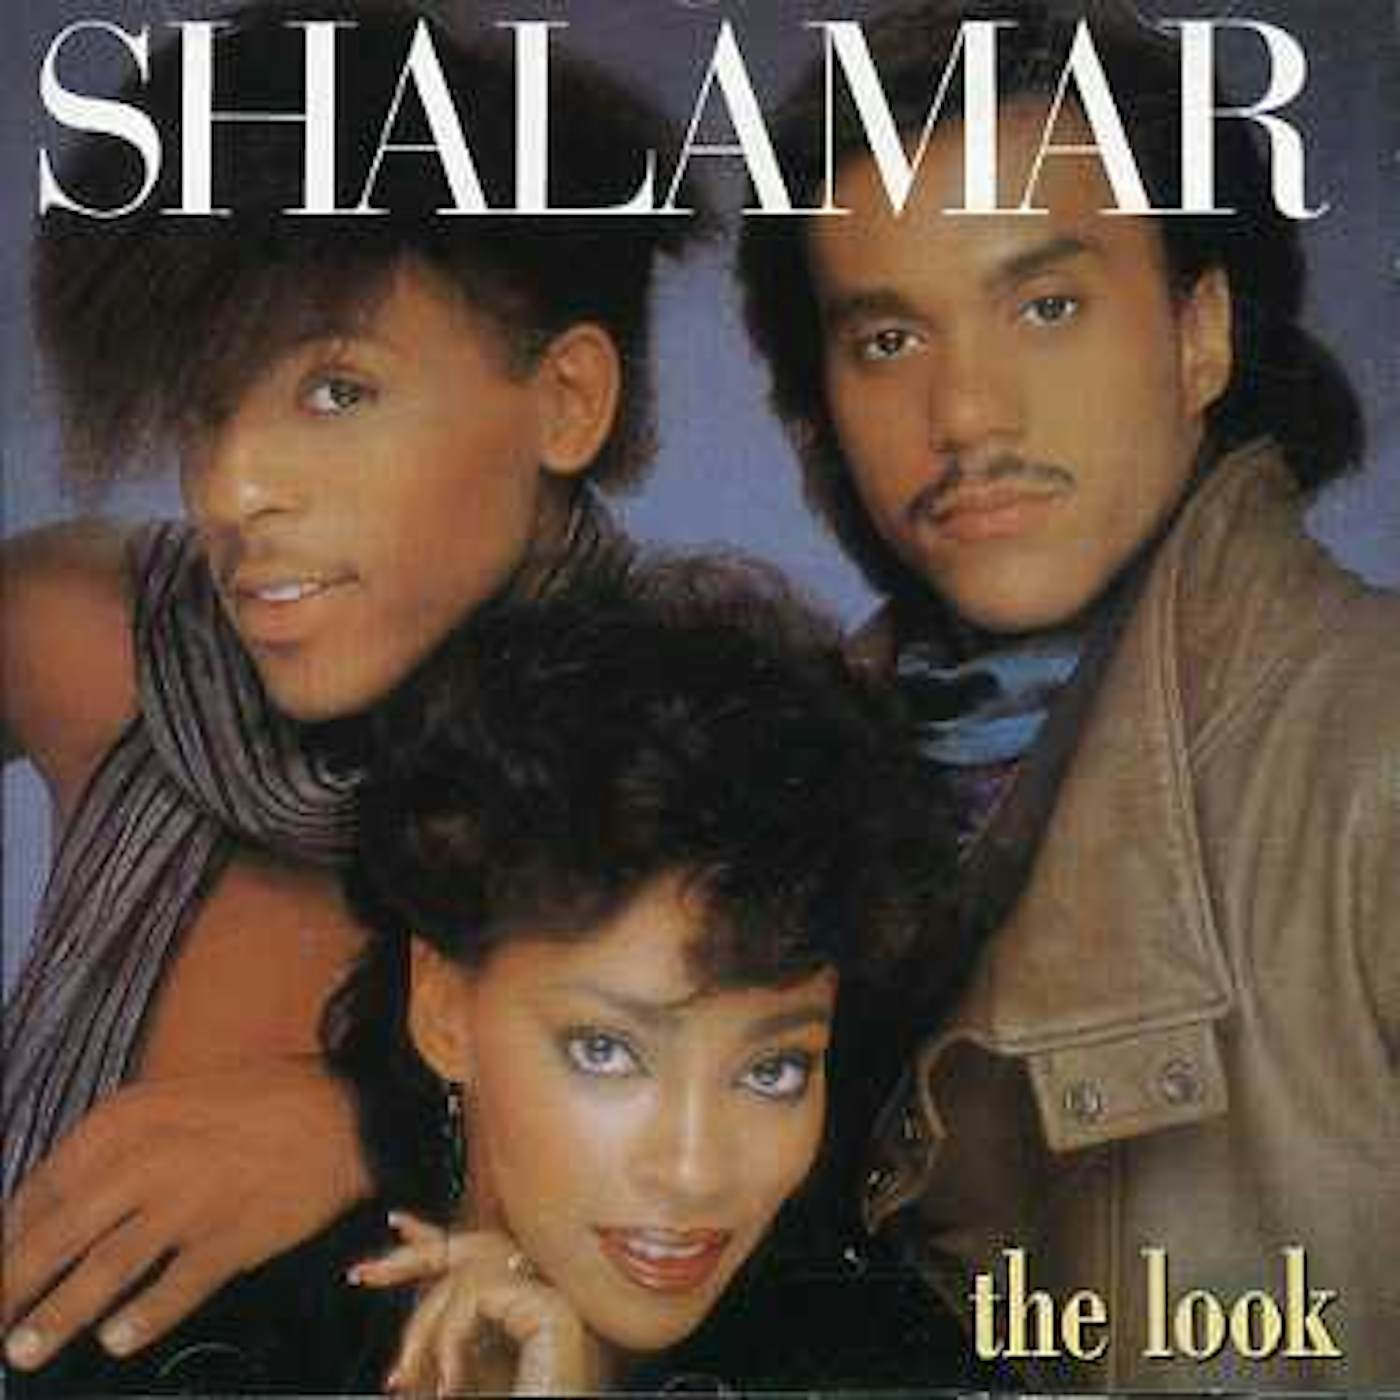 Shalamar LOOK CD